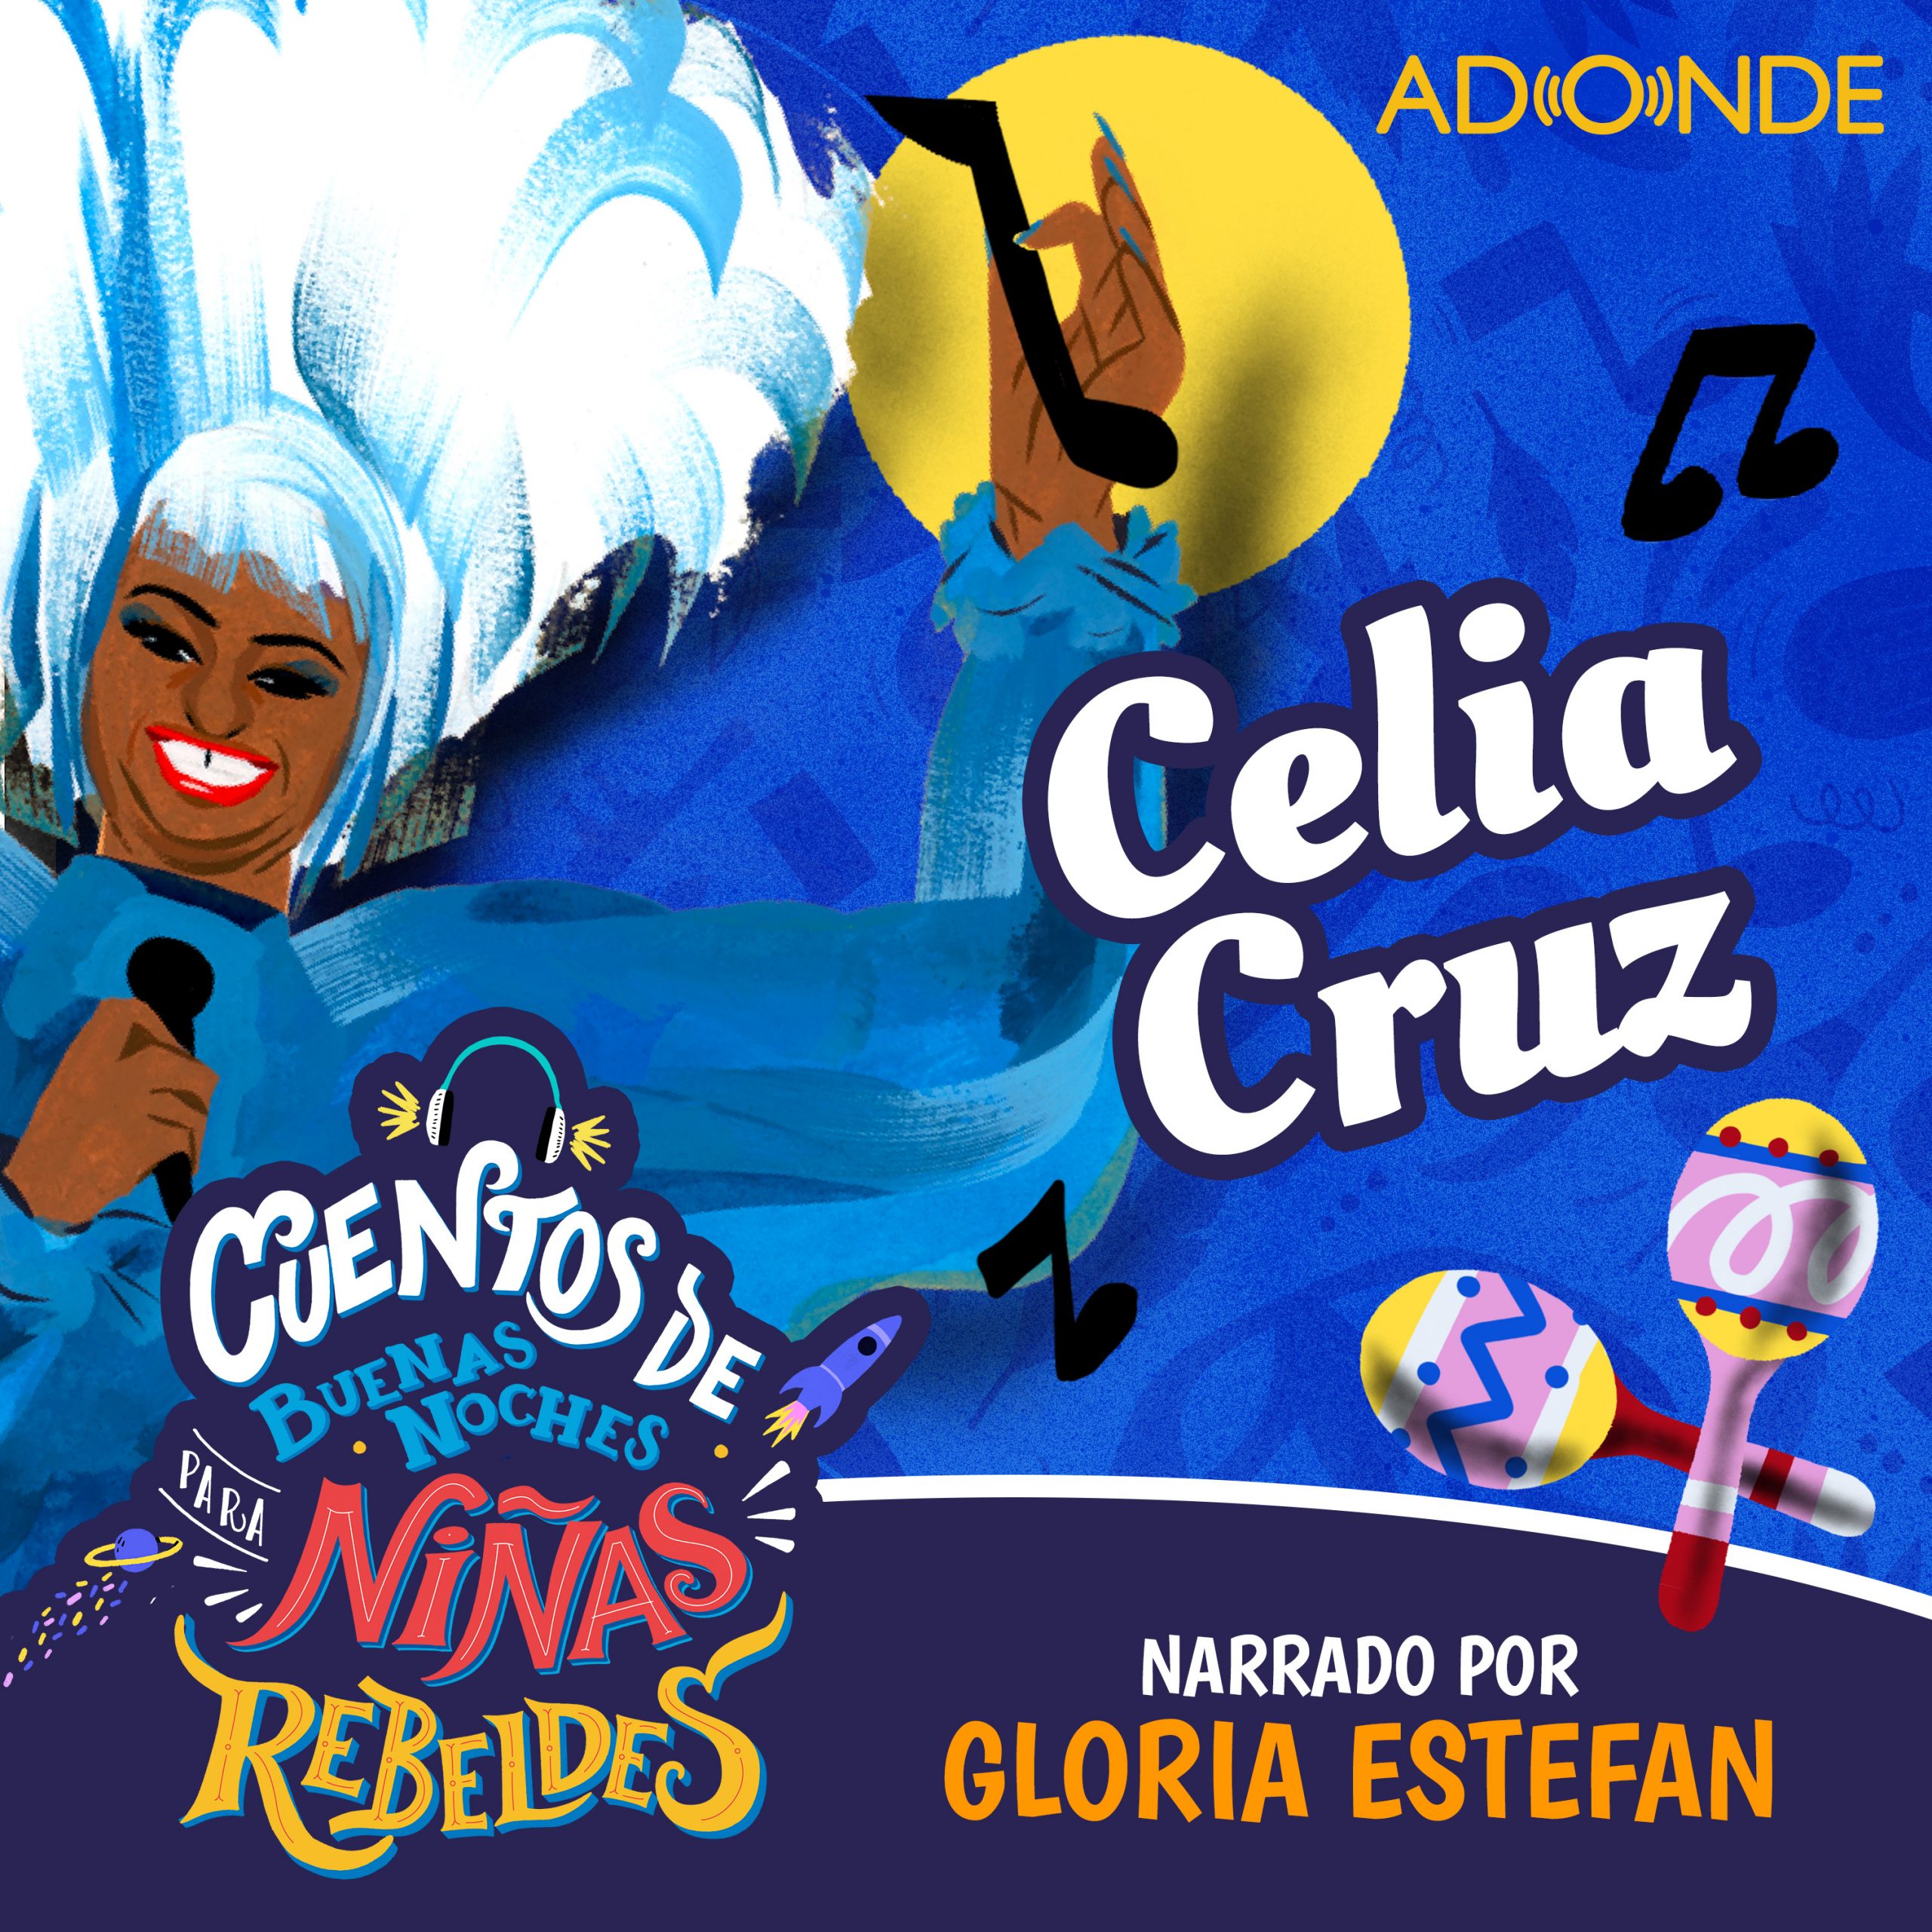 Ninas Rebeldes Podcast: Celia Cruz, narrado por Gloria Estefan